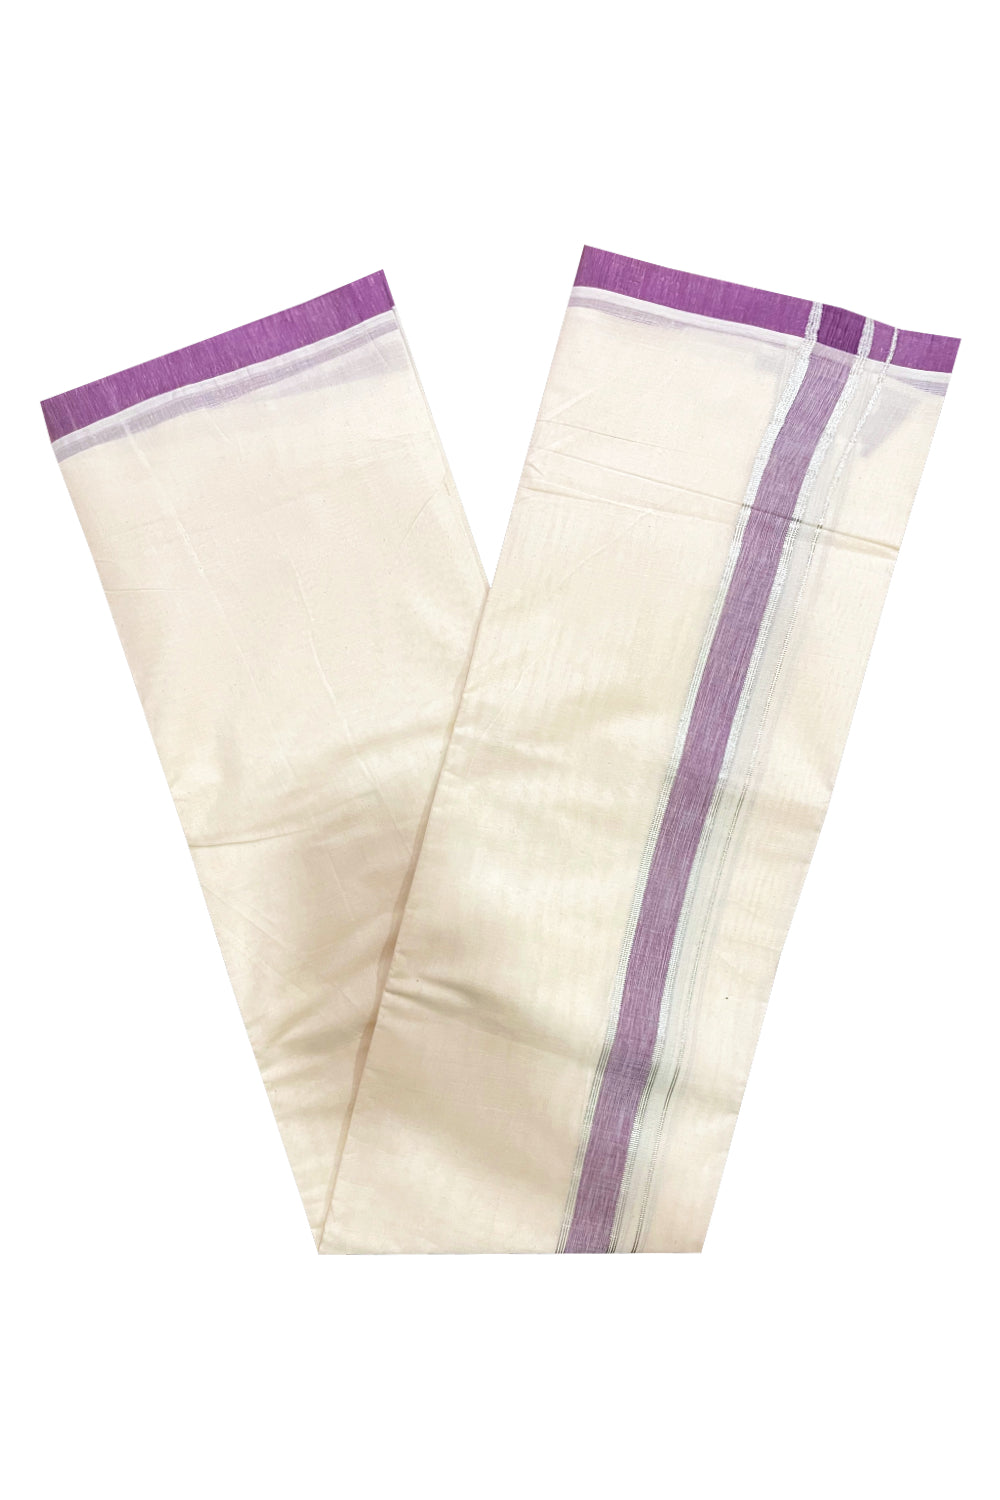 Cotton Double Mundu with Purple and Silver Kasavu Kara (South Indian Kerala Dhoti)